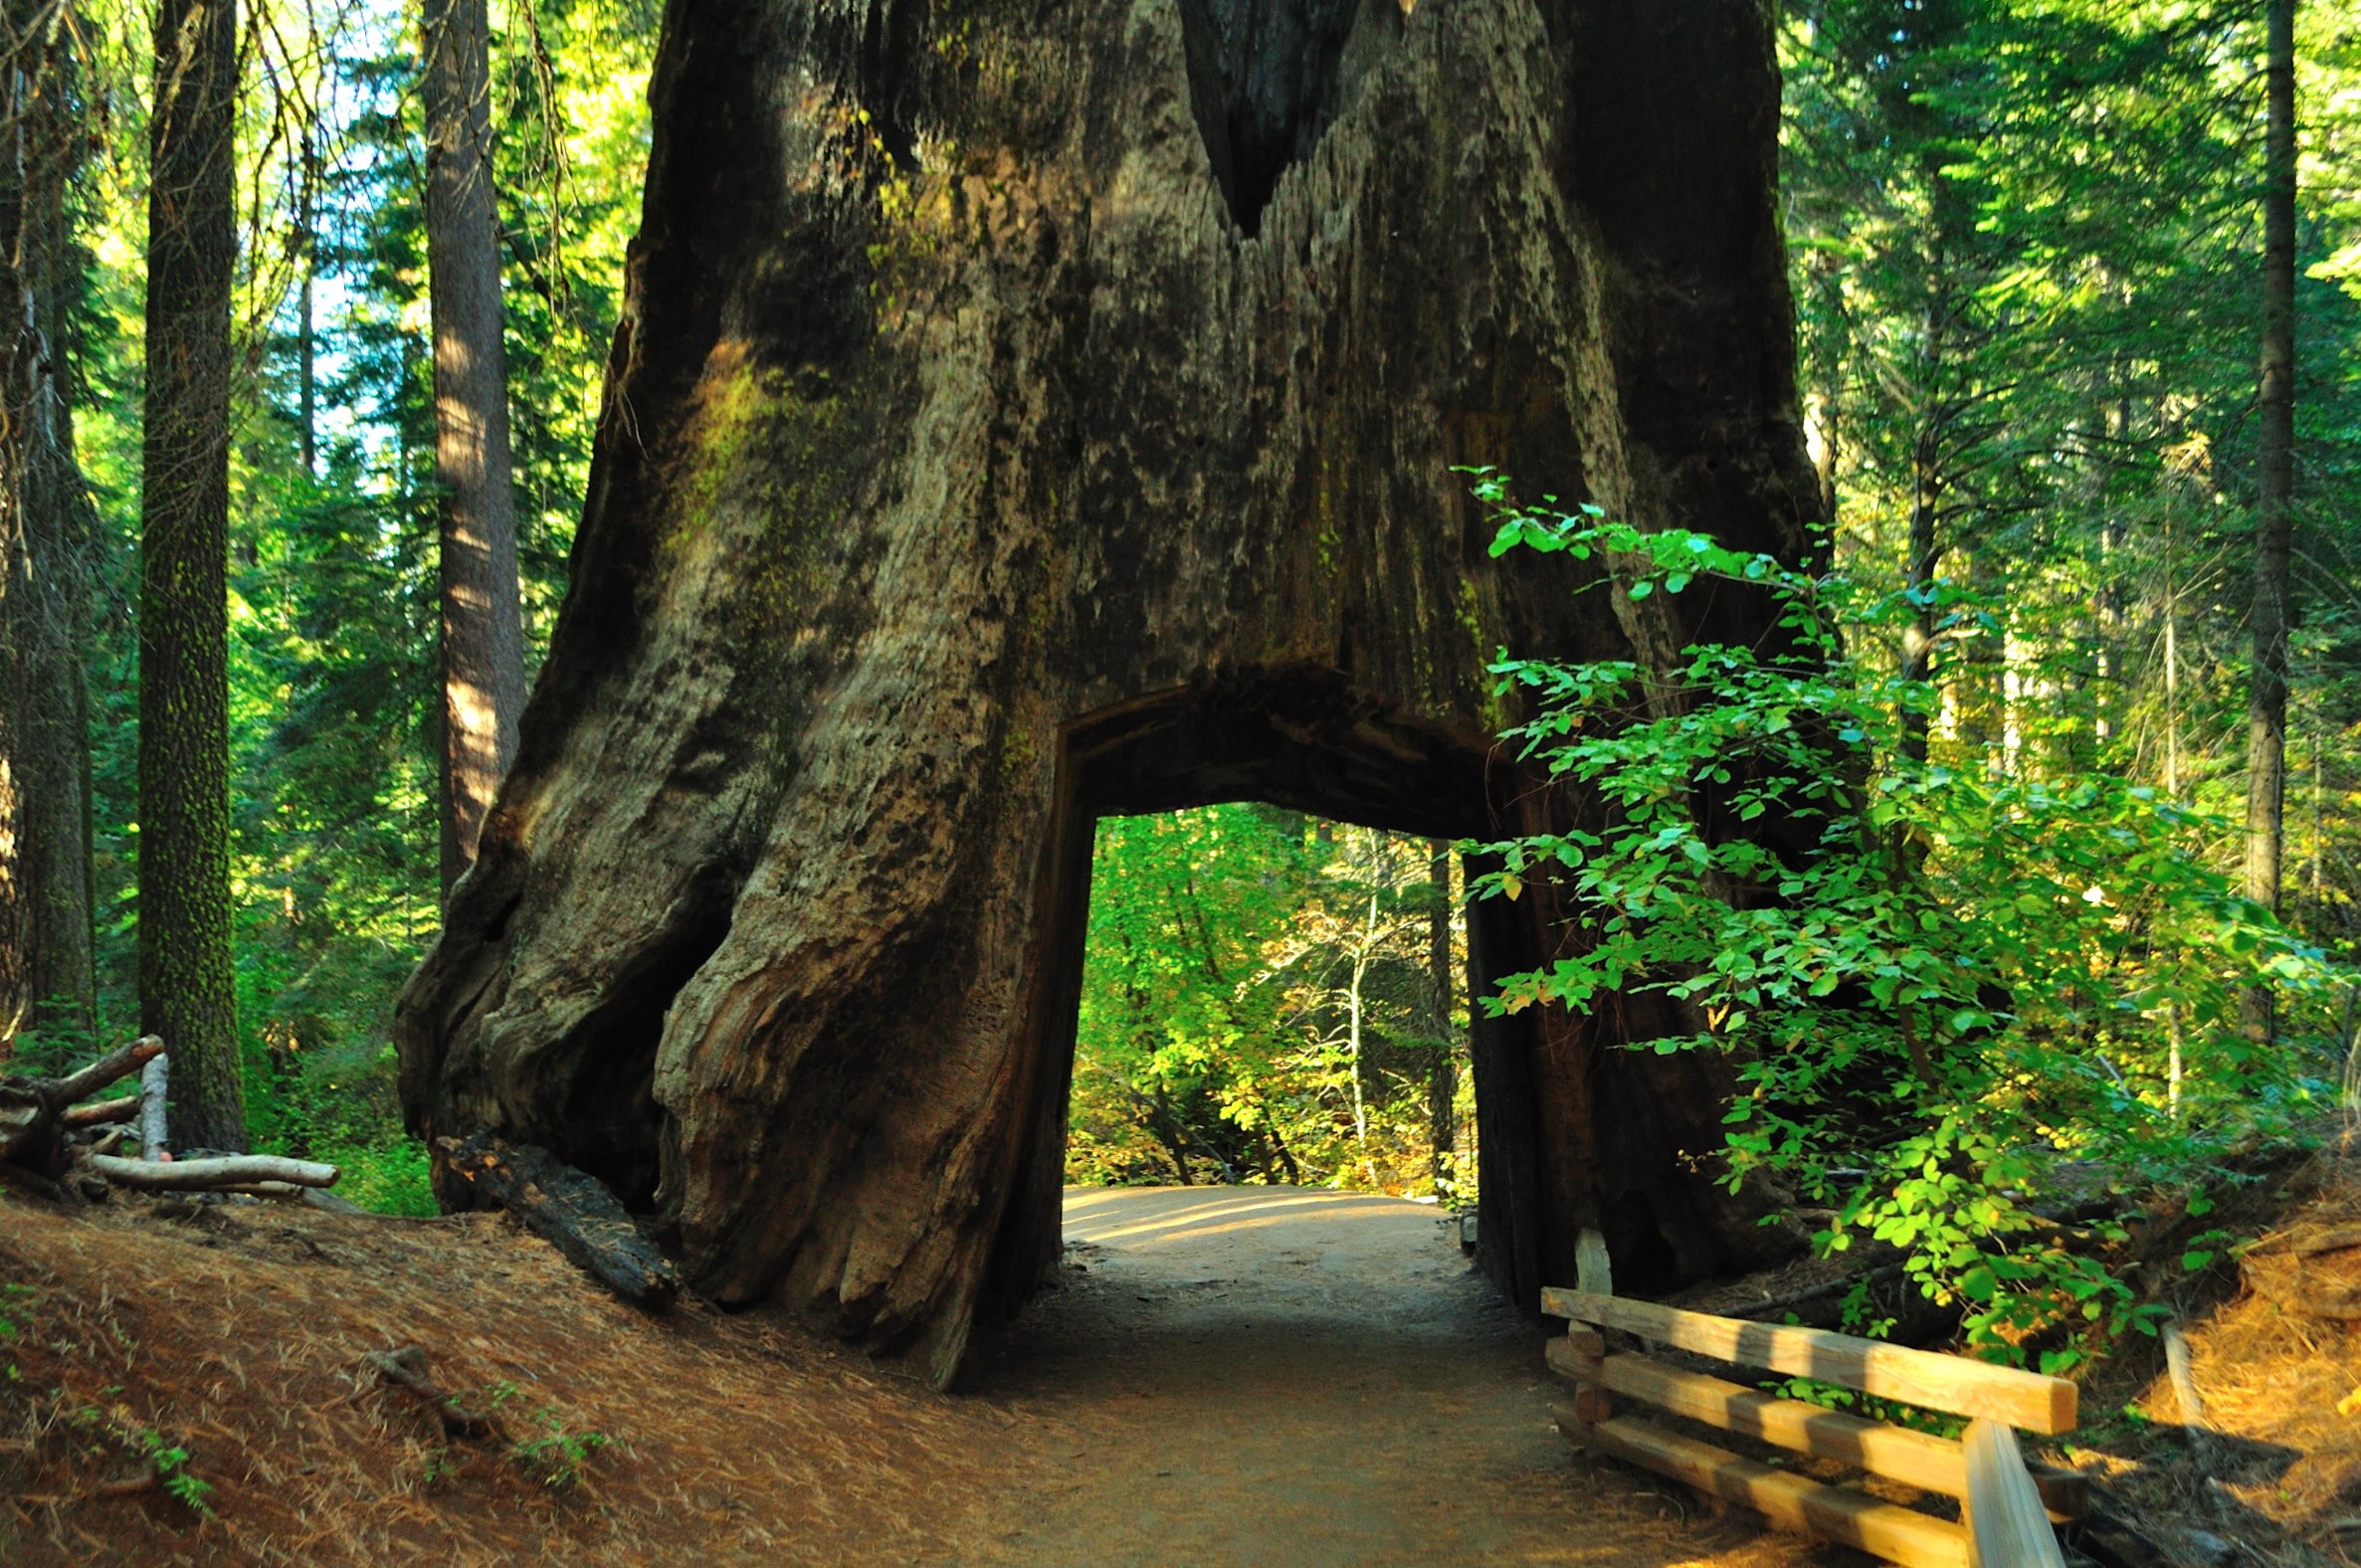 Save Oregon's Oldest Trees